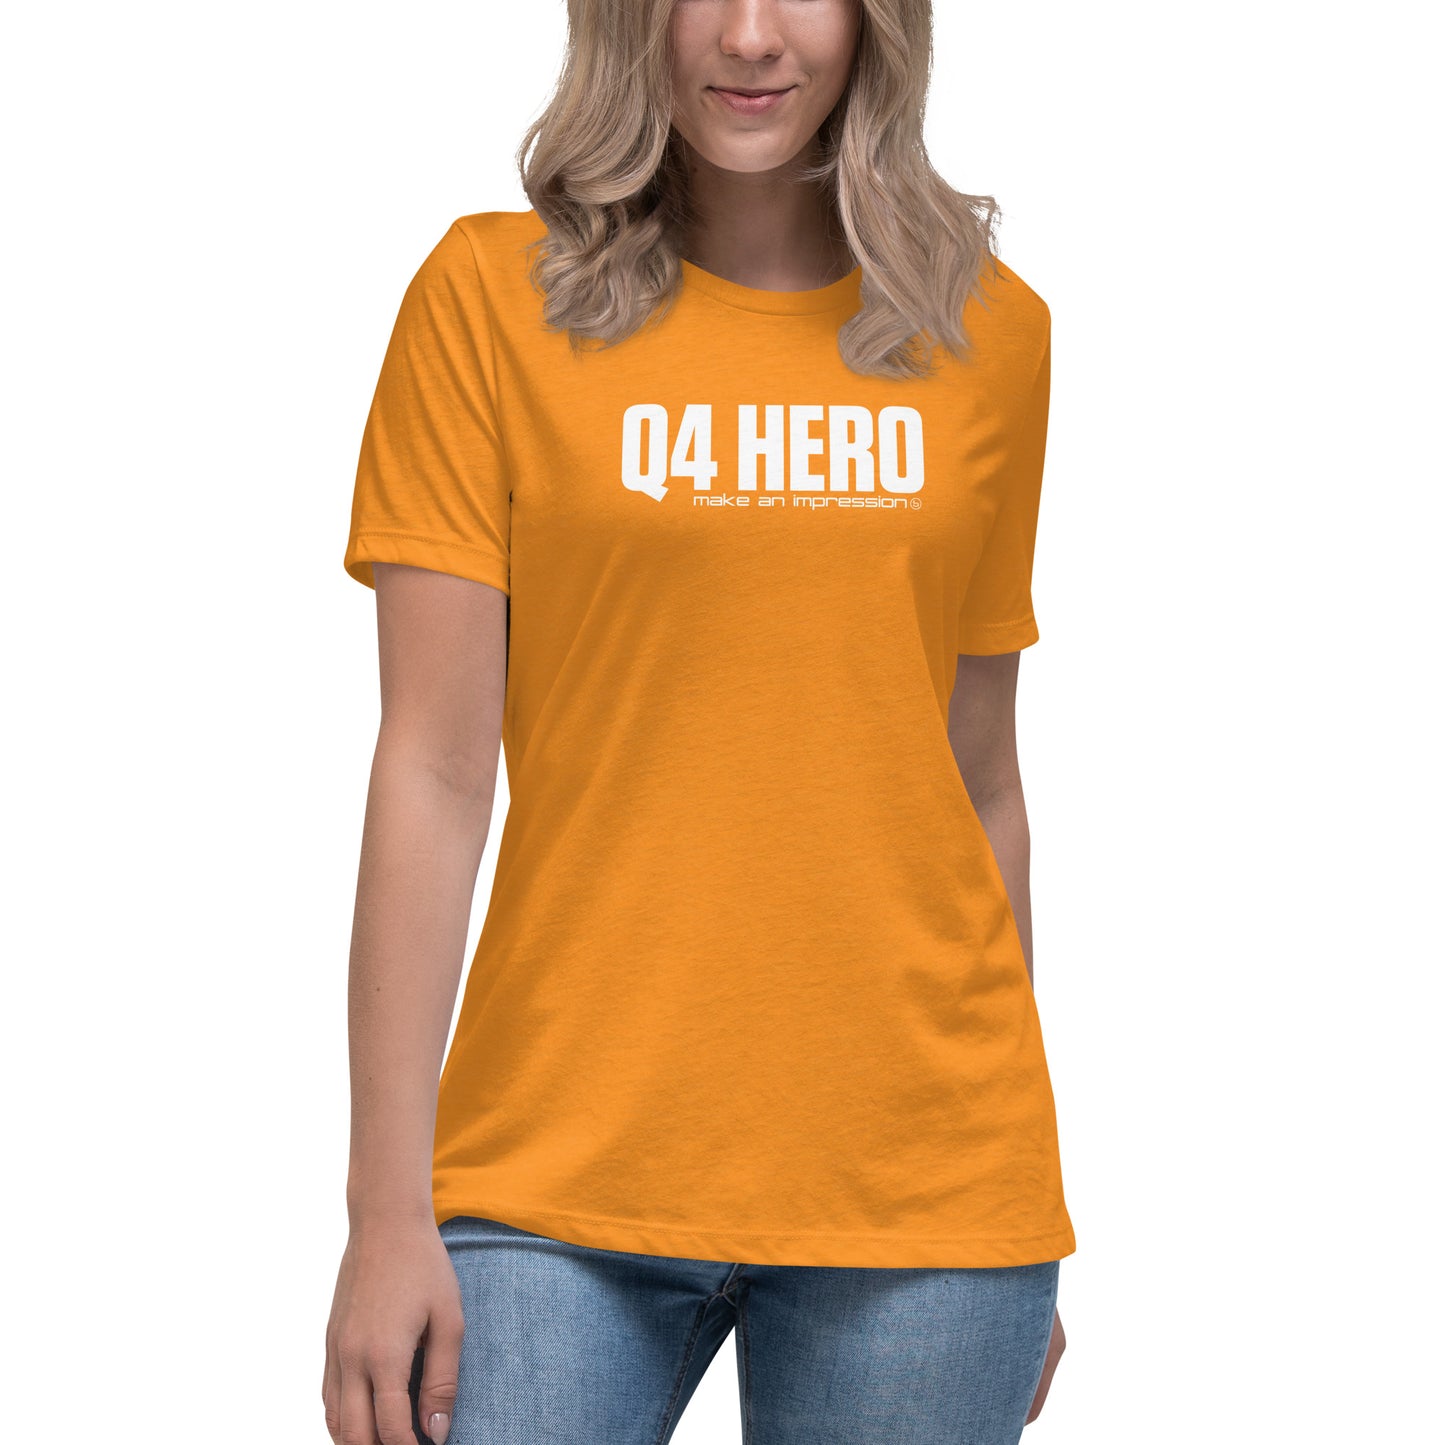 Q4 HERO T-Shirt - Women's Relaxed Cut - White